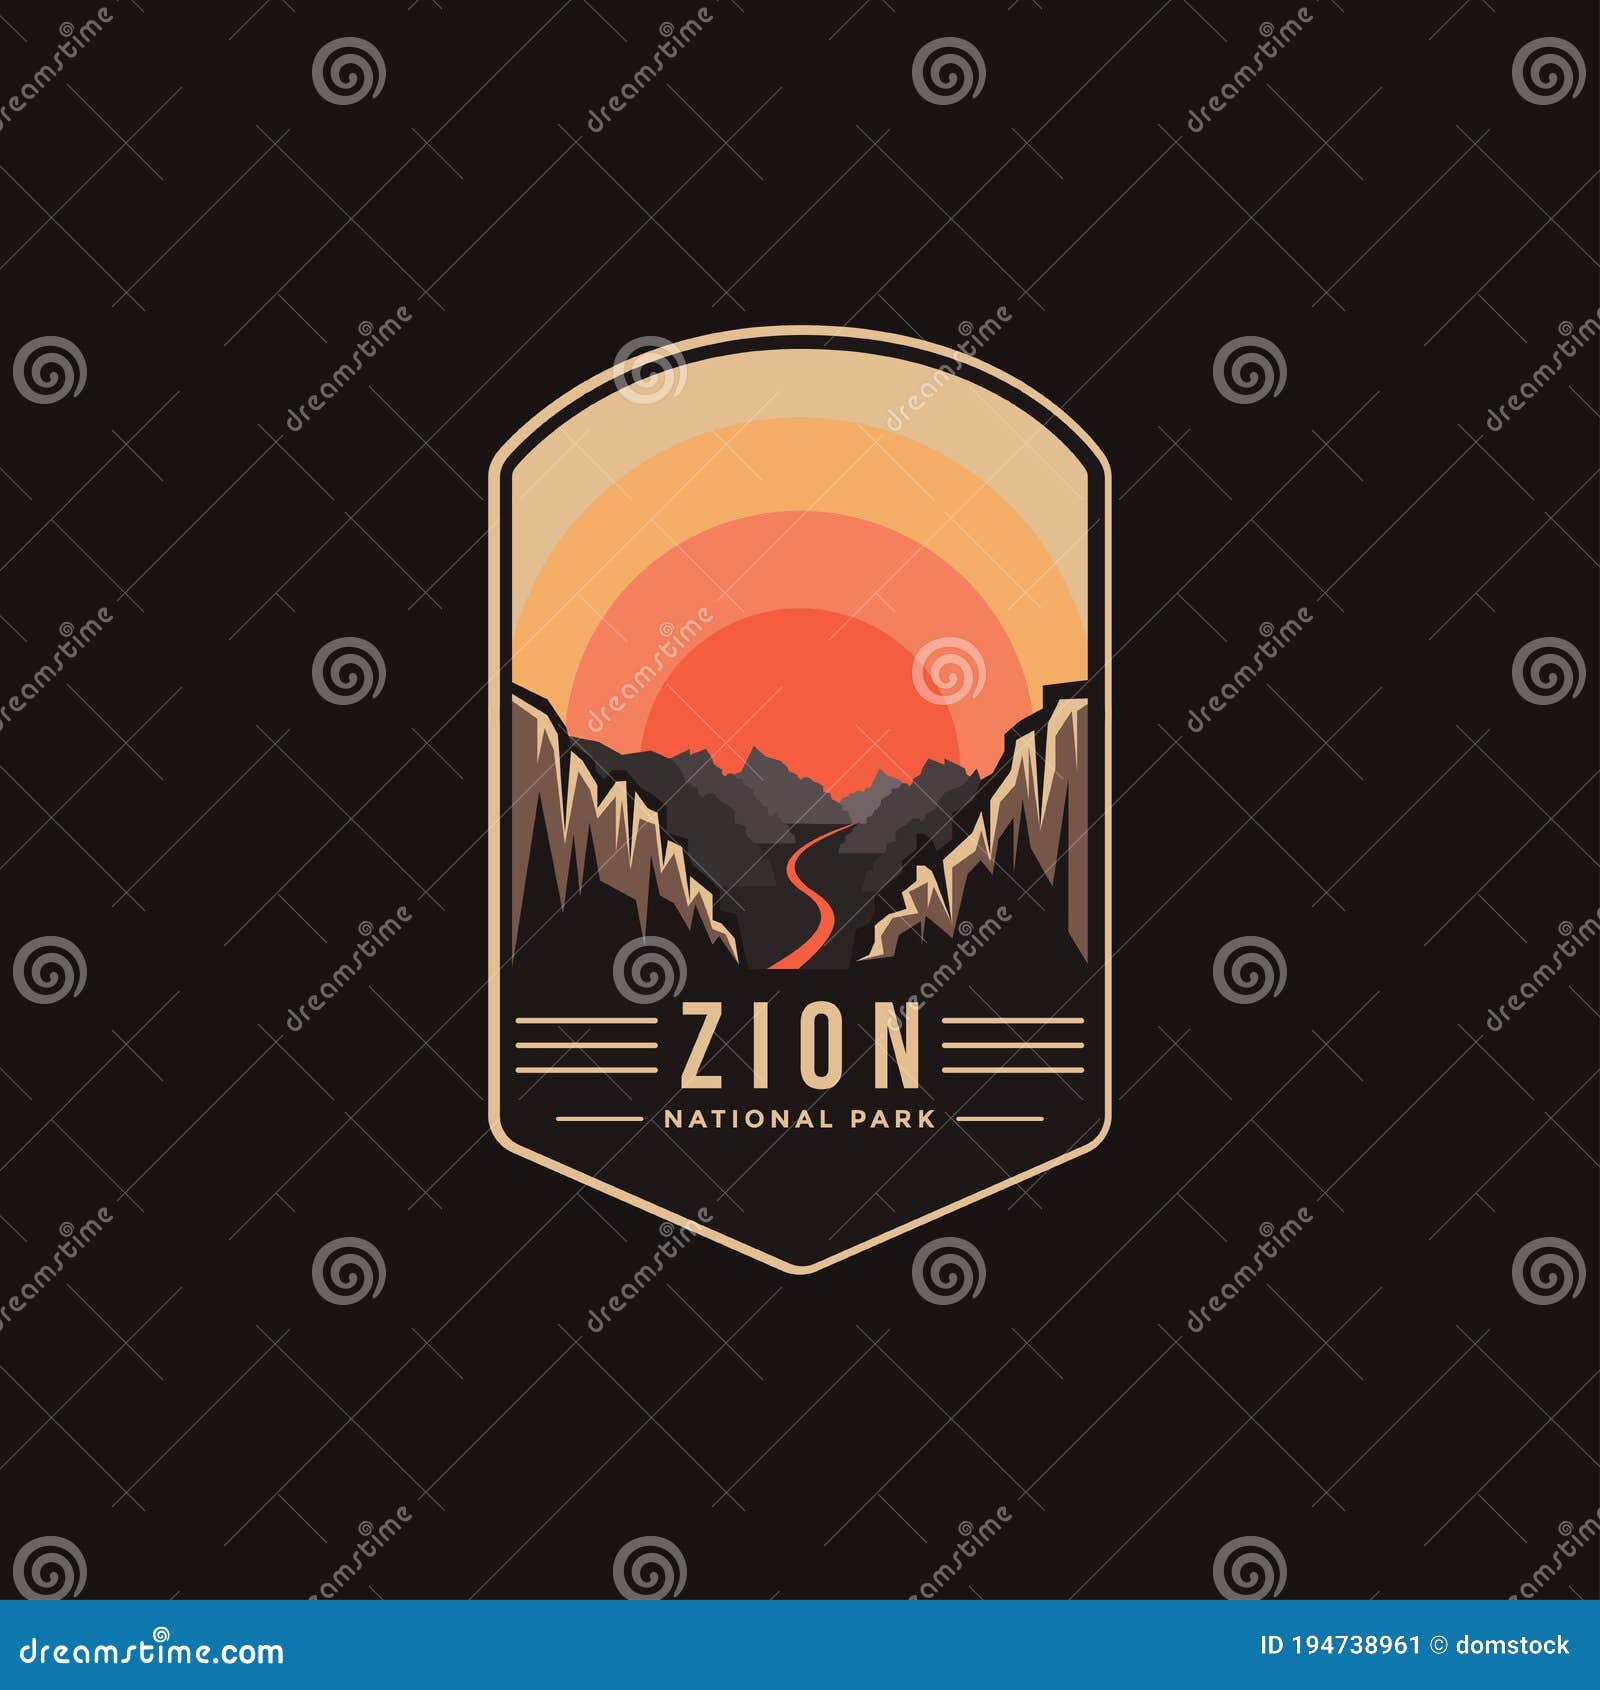 emblem patch logo  of zion national park